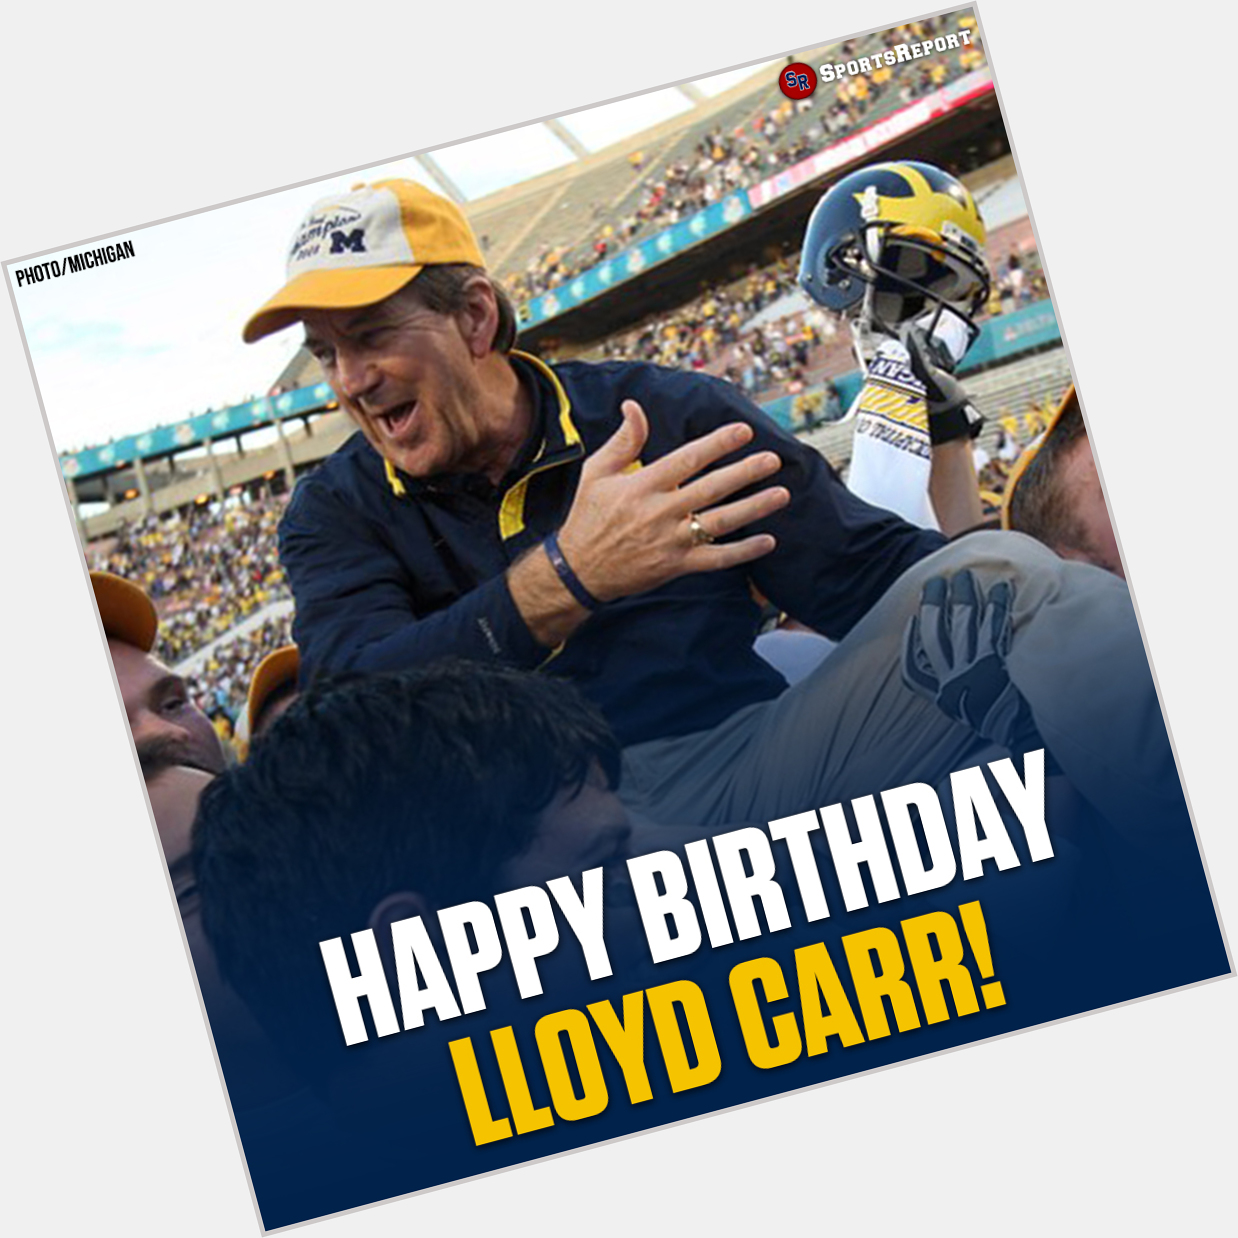  Fans, let\s wish Coaching great Lloyd Carr a Happy Birthday! 